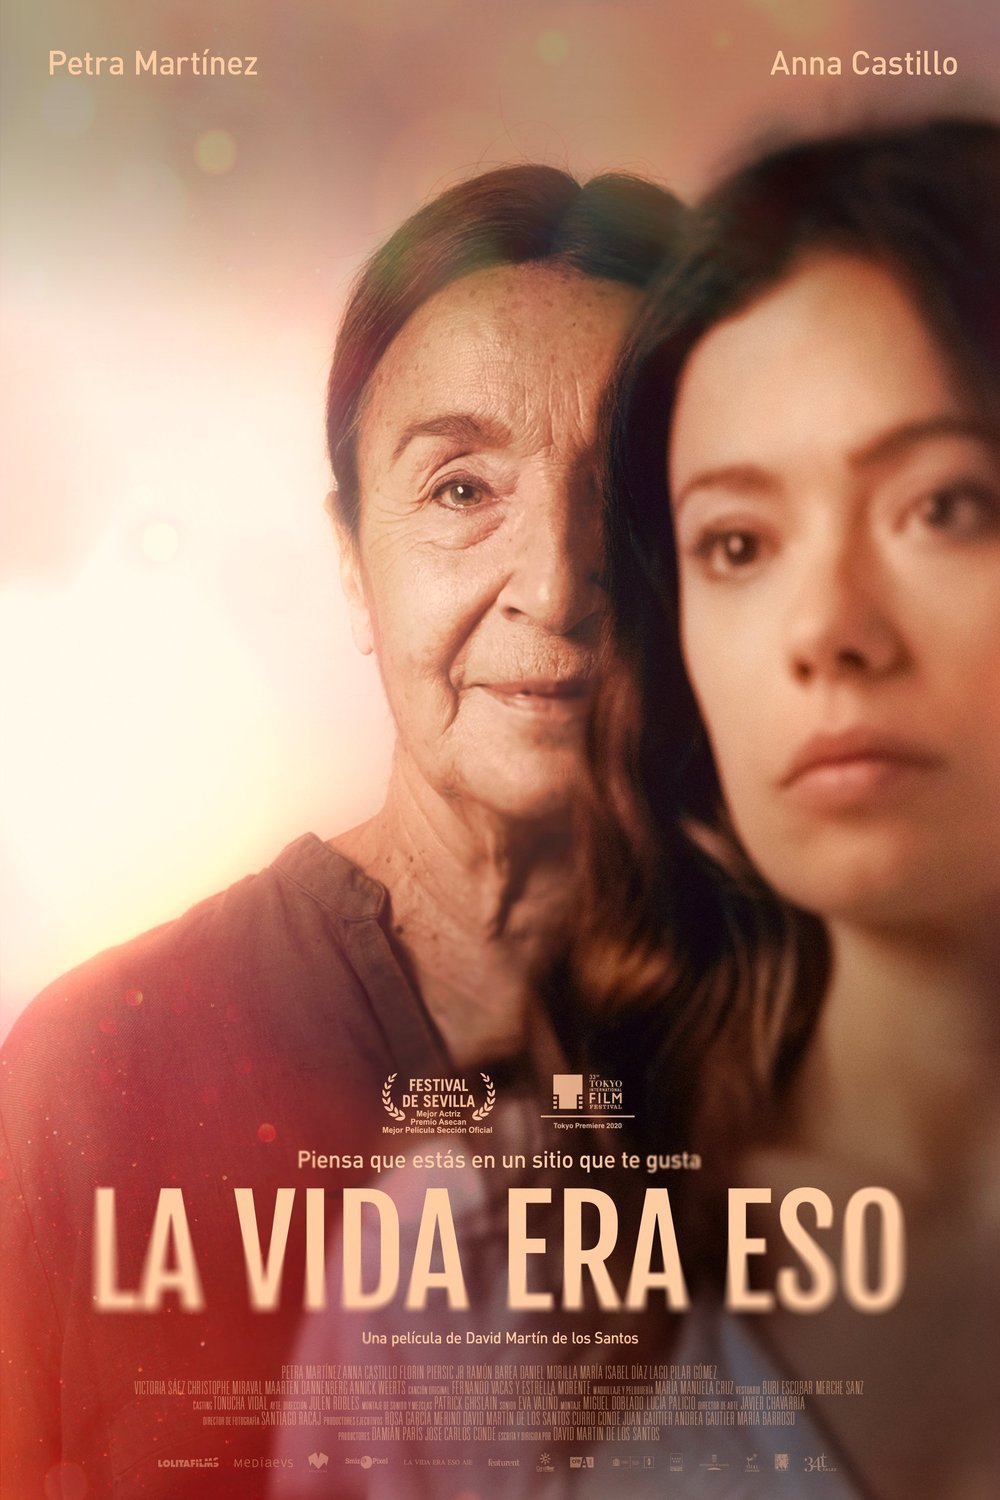 Spanish poster of the movie La vida era eso